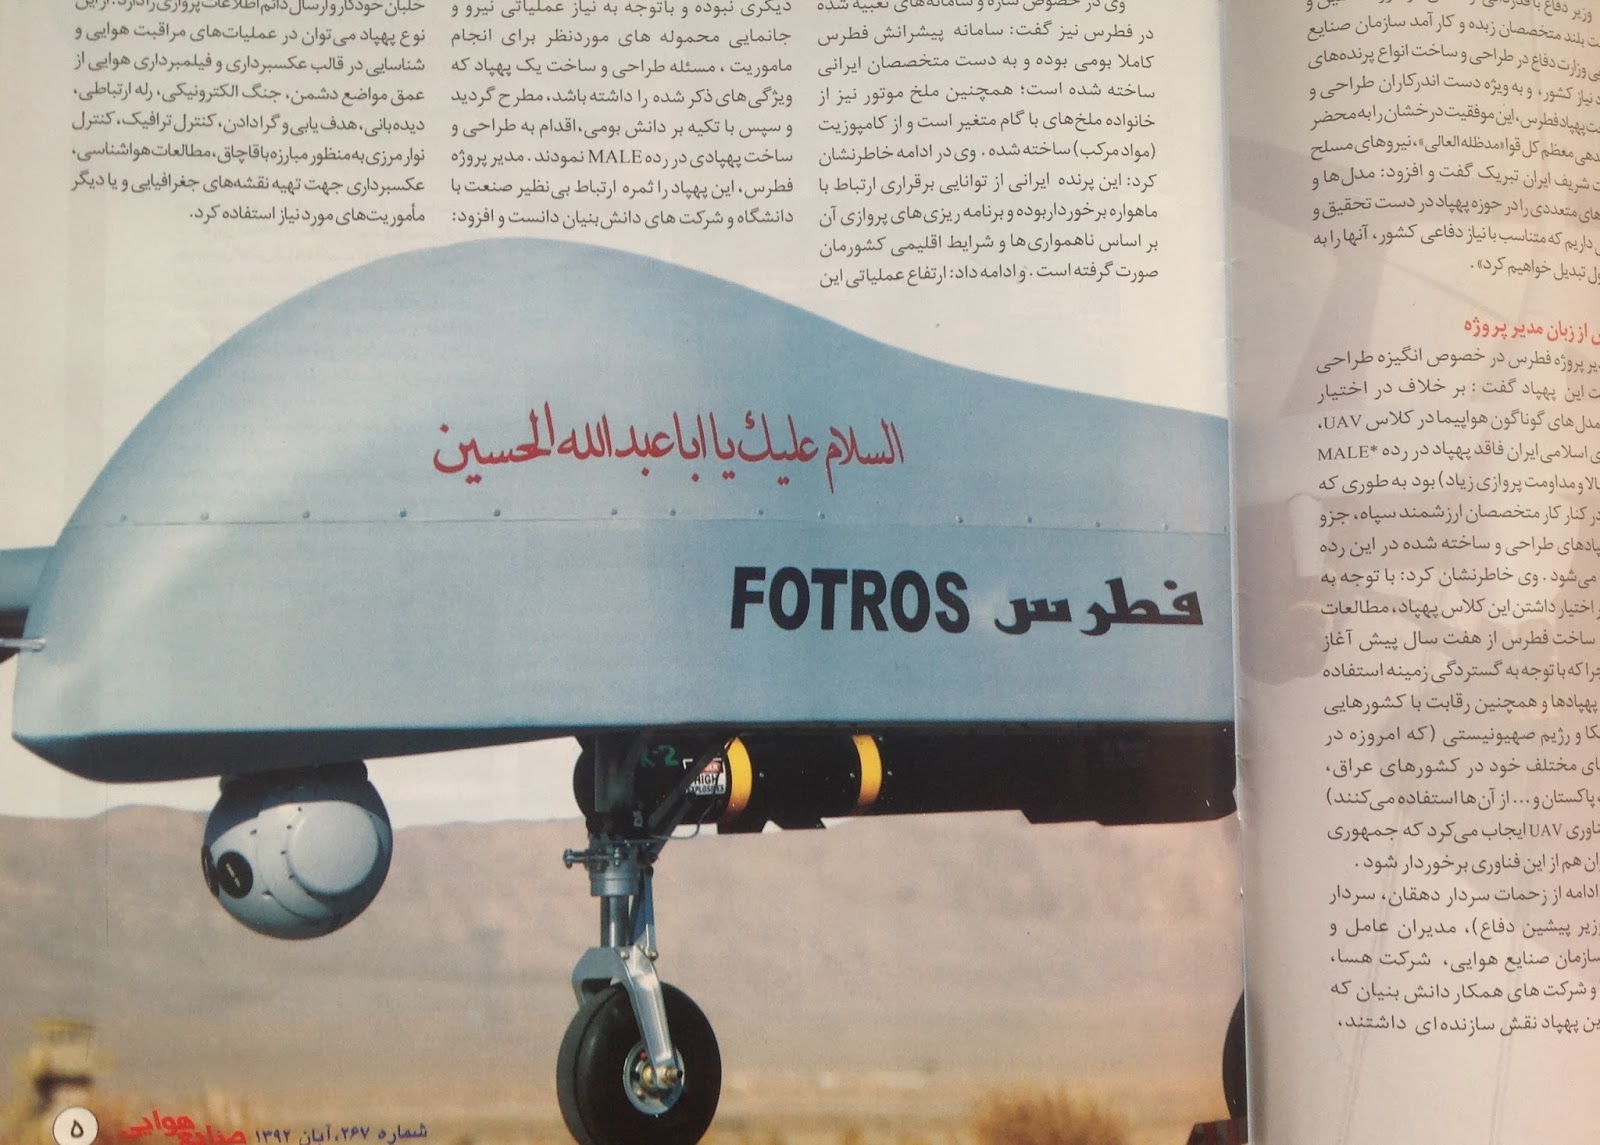 Iranian+Fotros+Medium-Altitude+Long-Endurance+%28MALE%29+Unmanned+Aerial+Vehicles+%28UAV%29.+Iranian+media+claimed+taht+Fotros+drone+i+%281%29.jpg